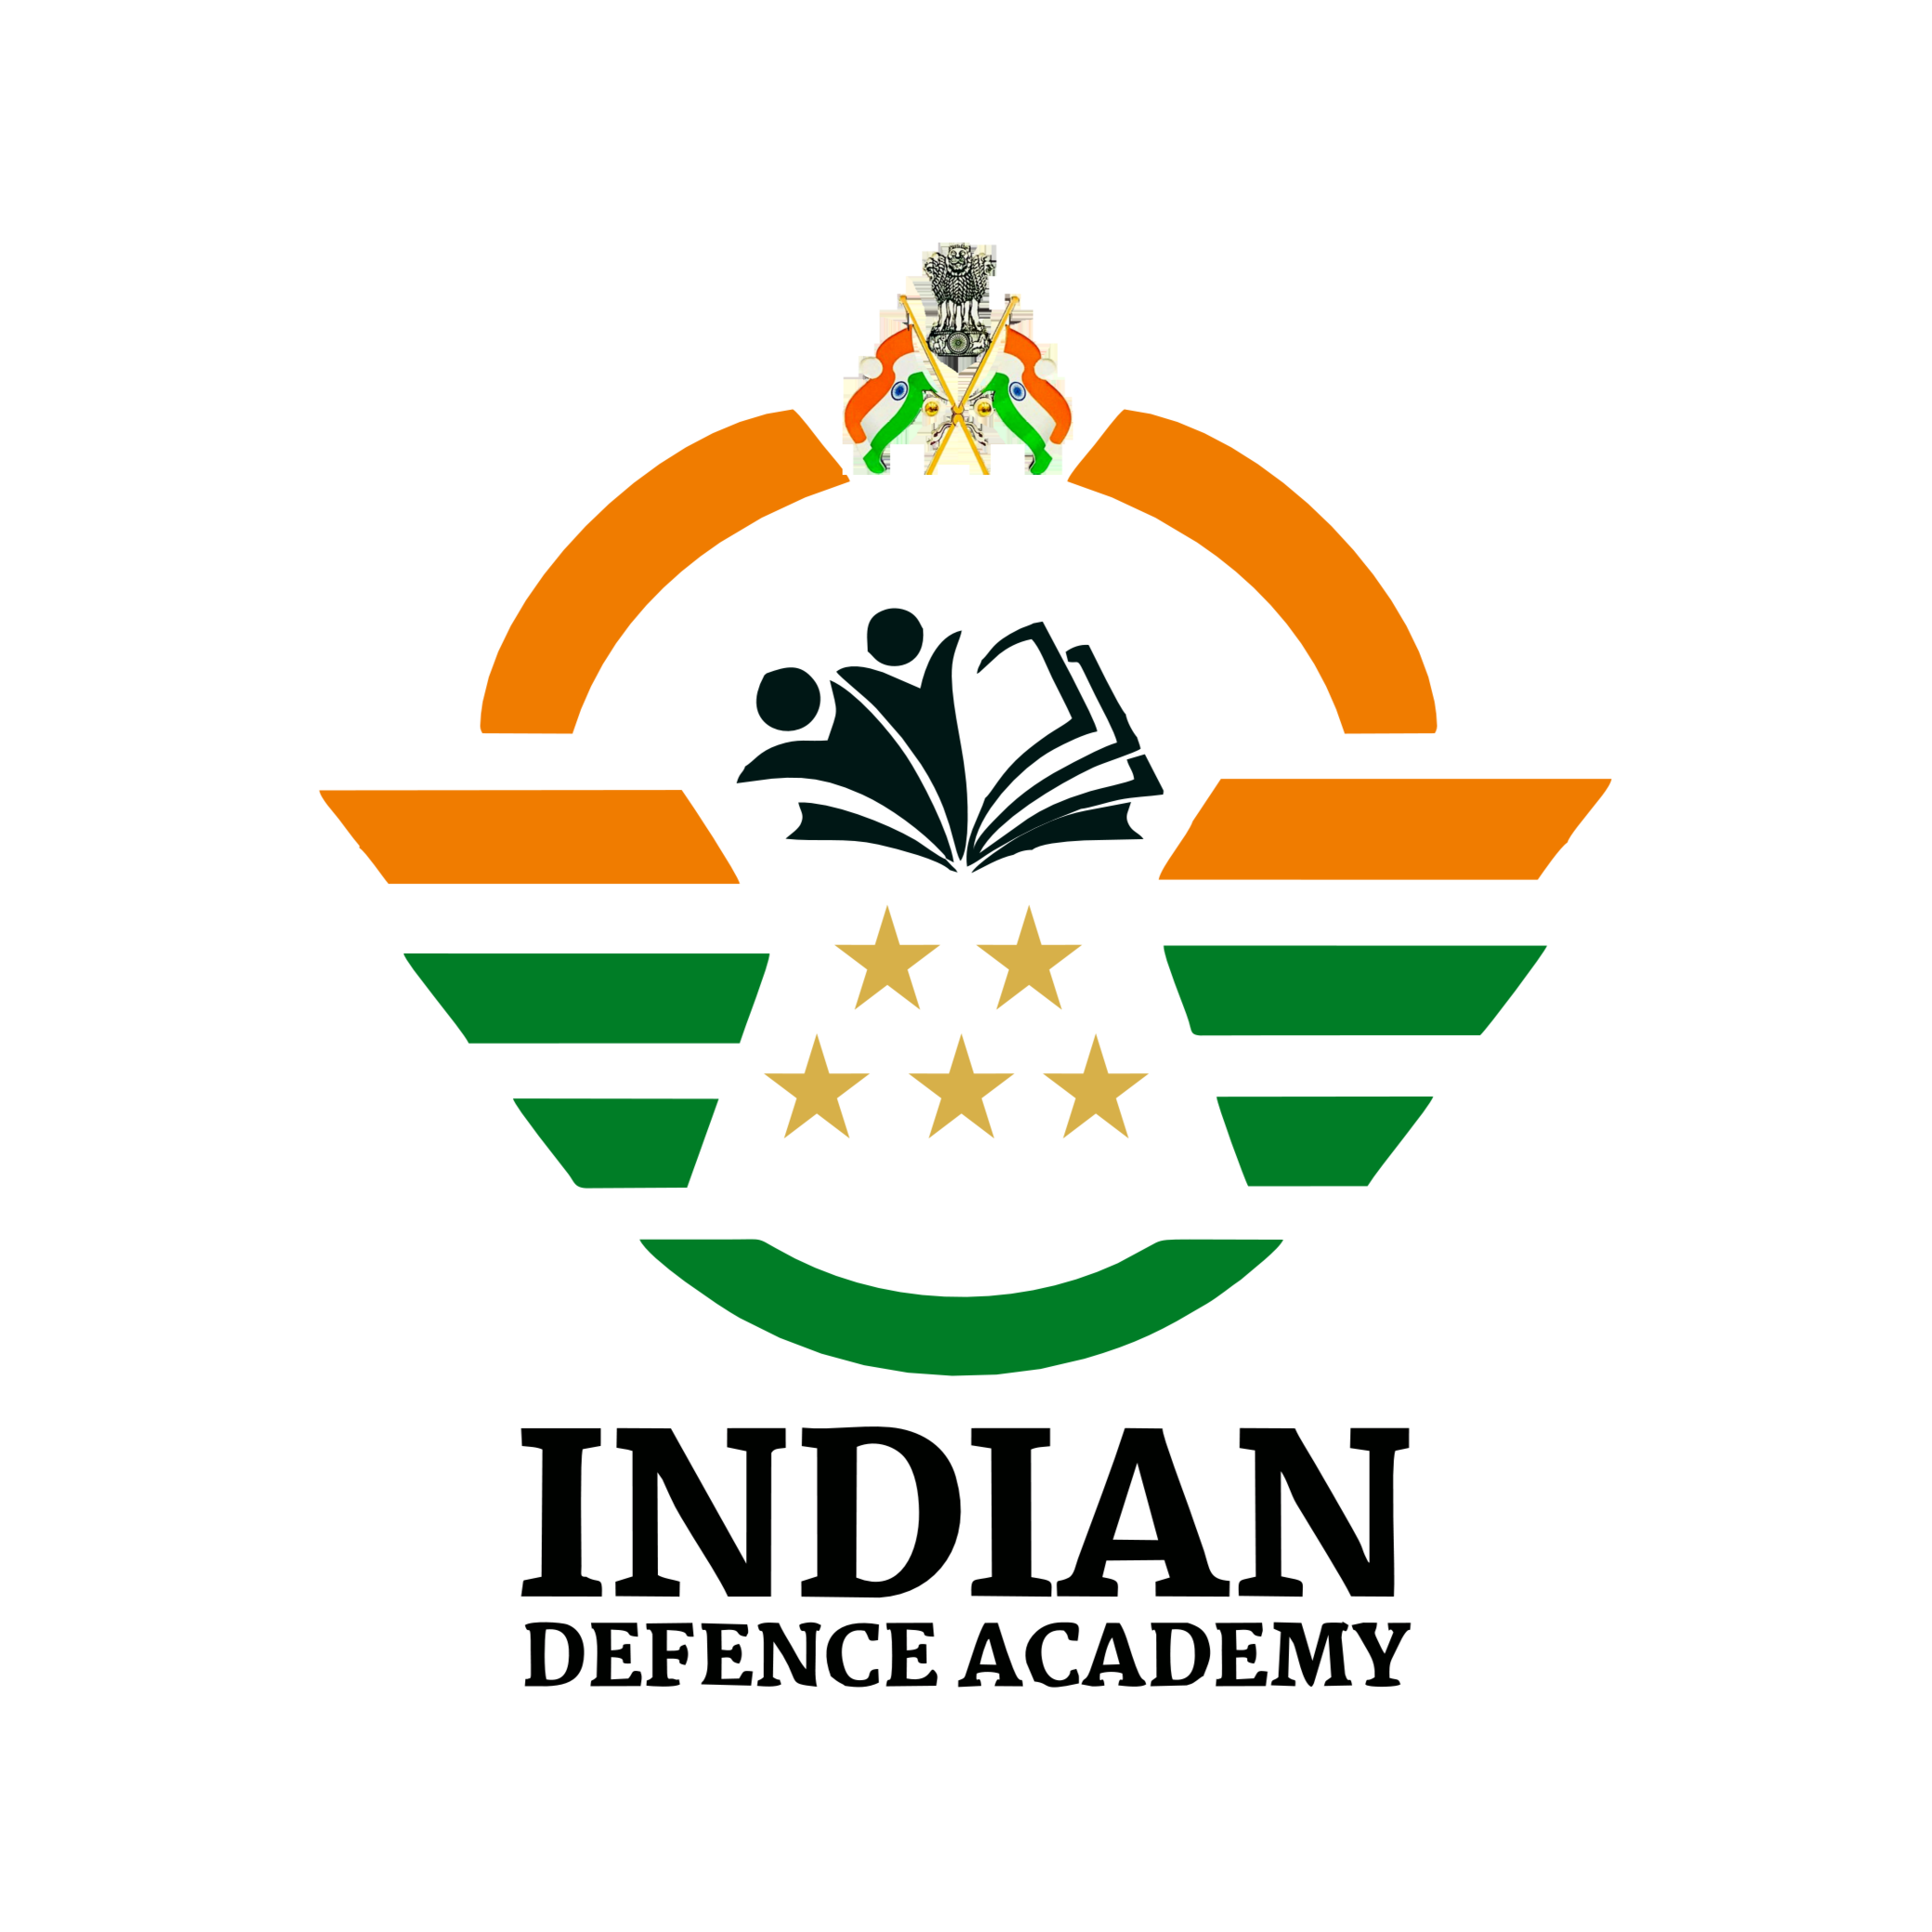 Indian Defence Academy logo